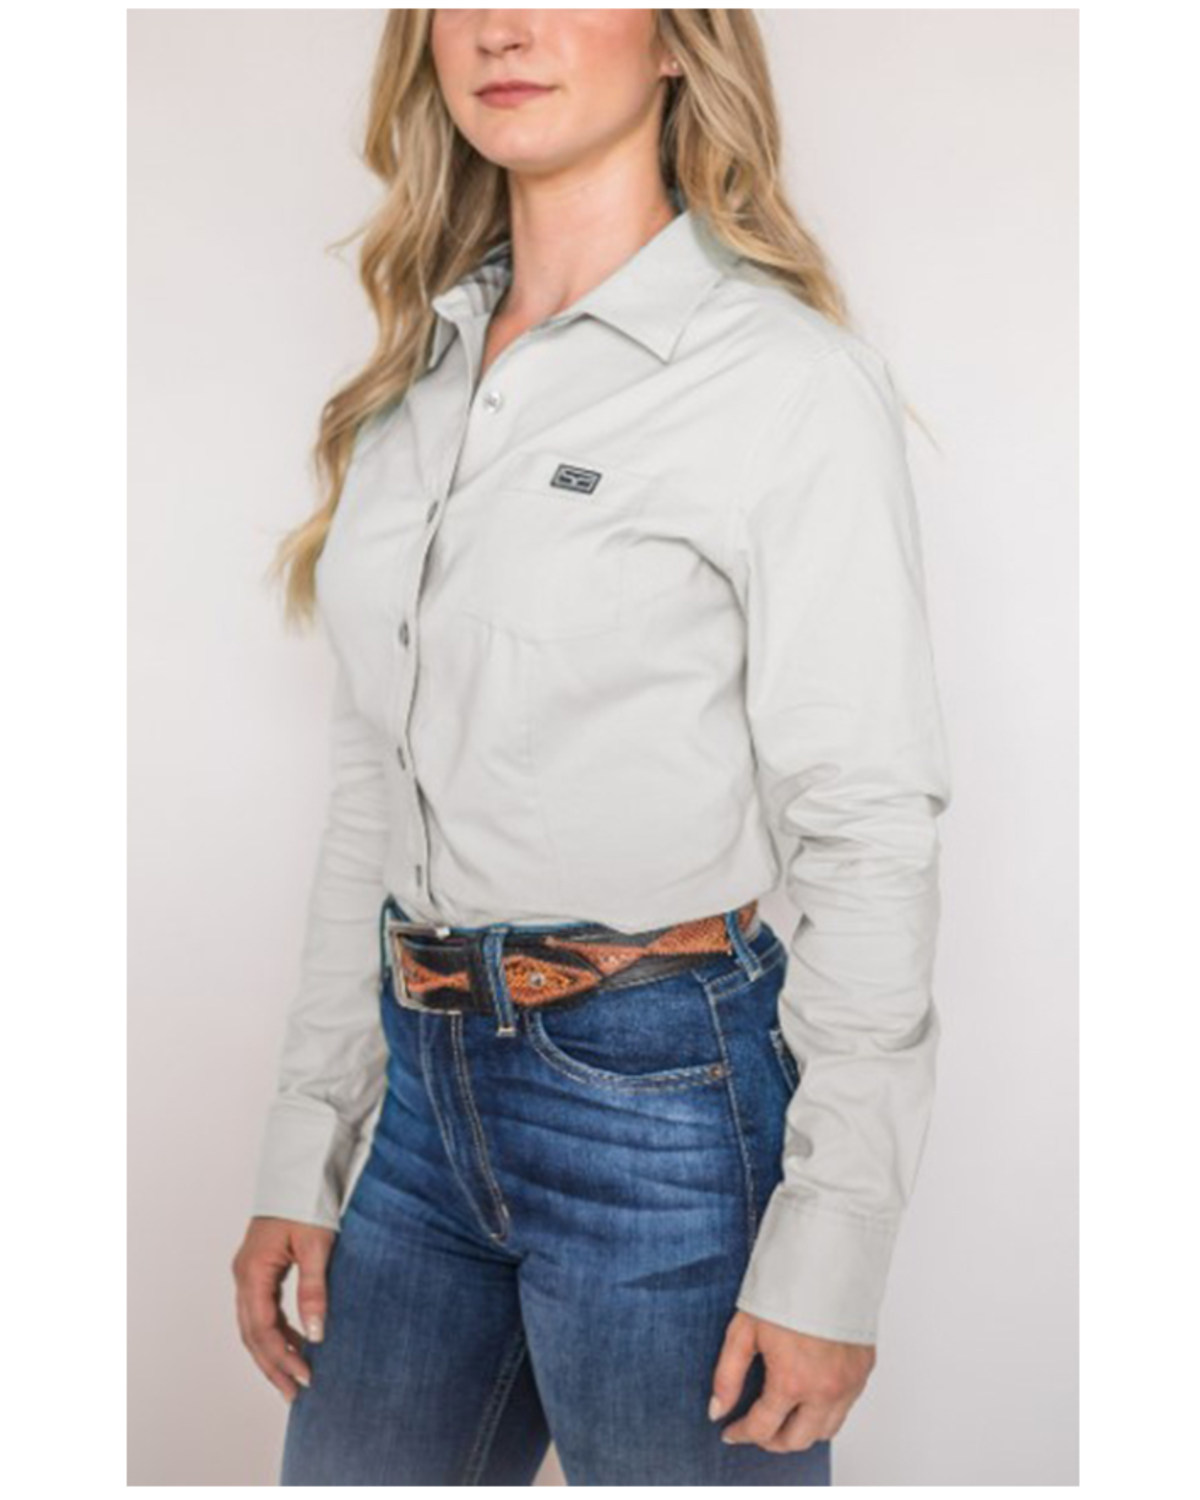 Kimes Ranch Women's Coolmax Linville Long Sleeve Button Down Shirt